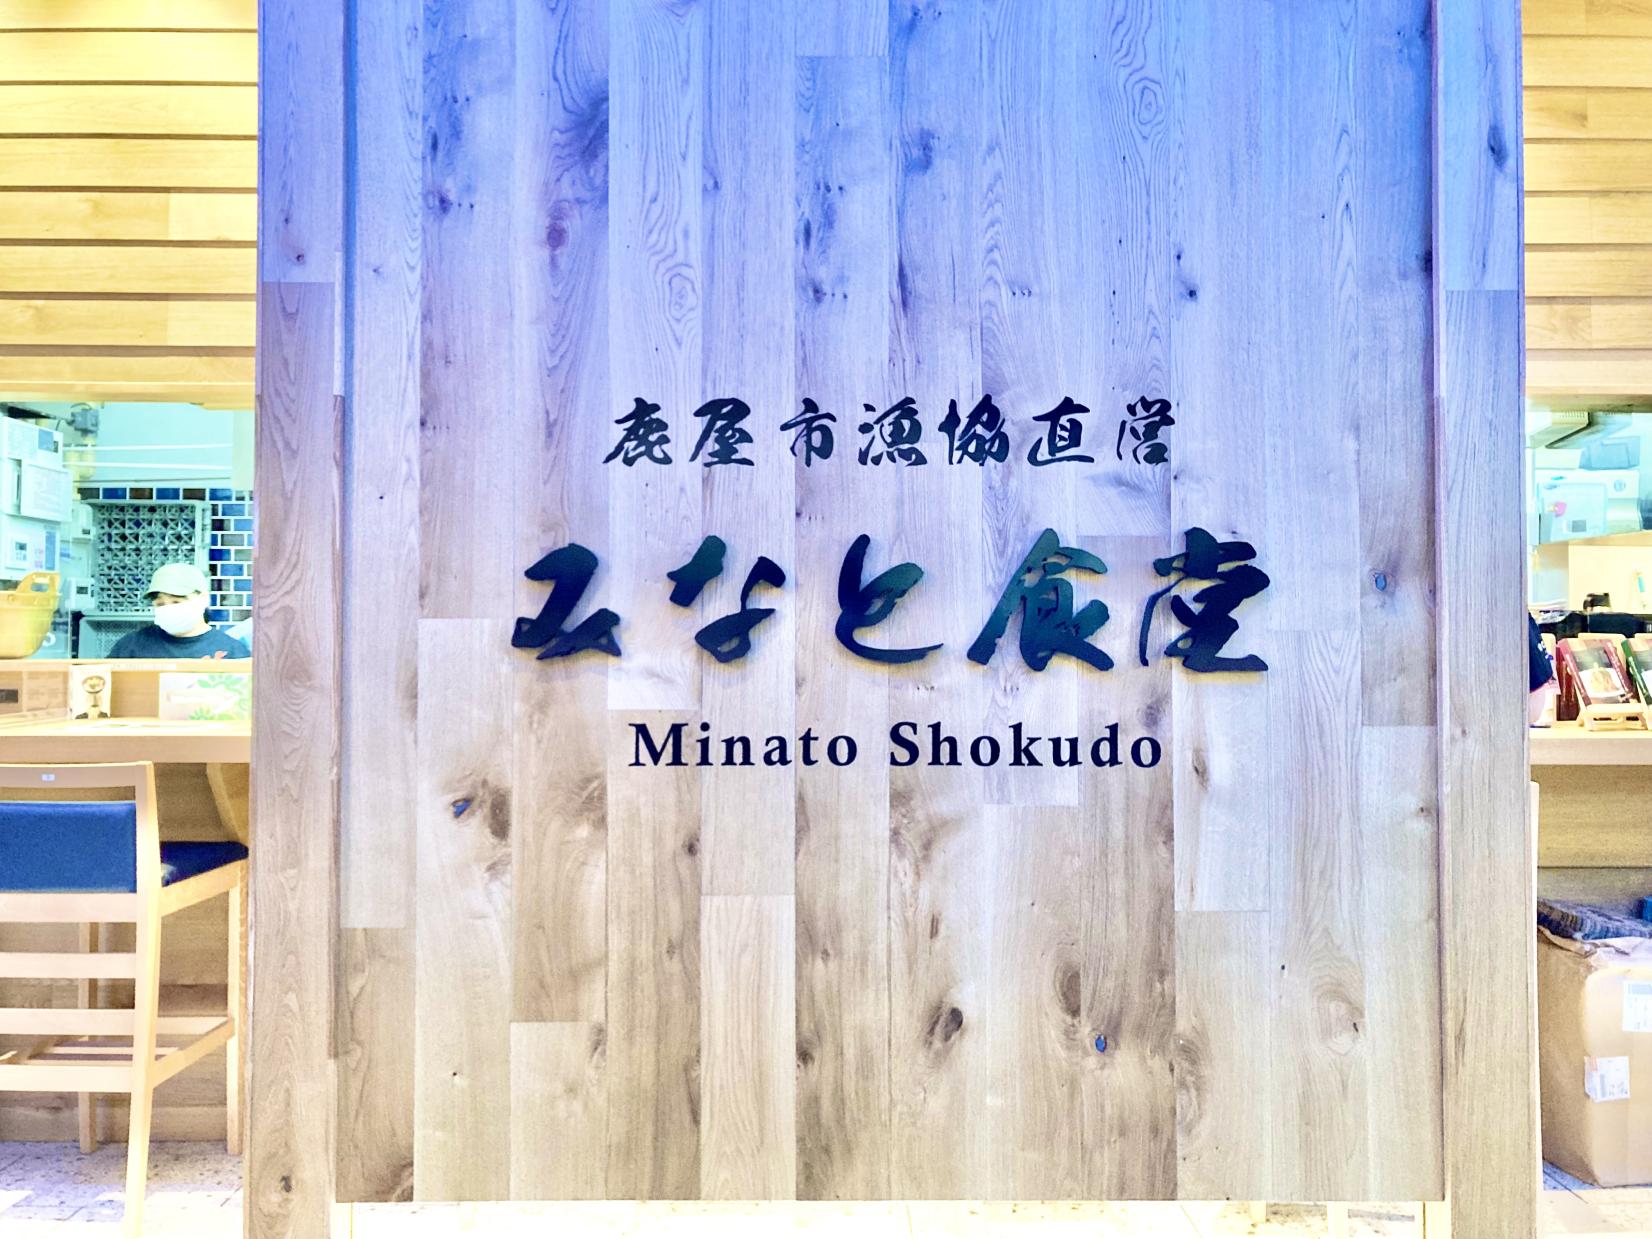 Minato Shokudo 2nd branch operated by Kanoya City Fishery Cooperative-8